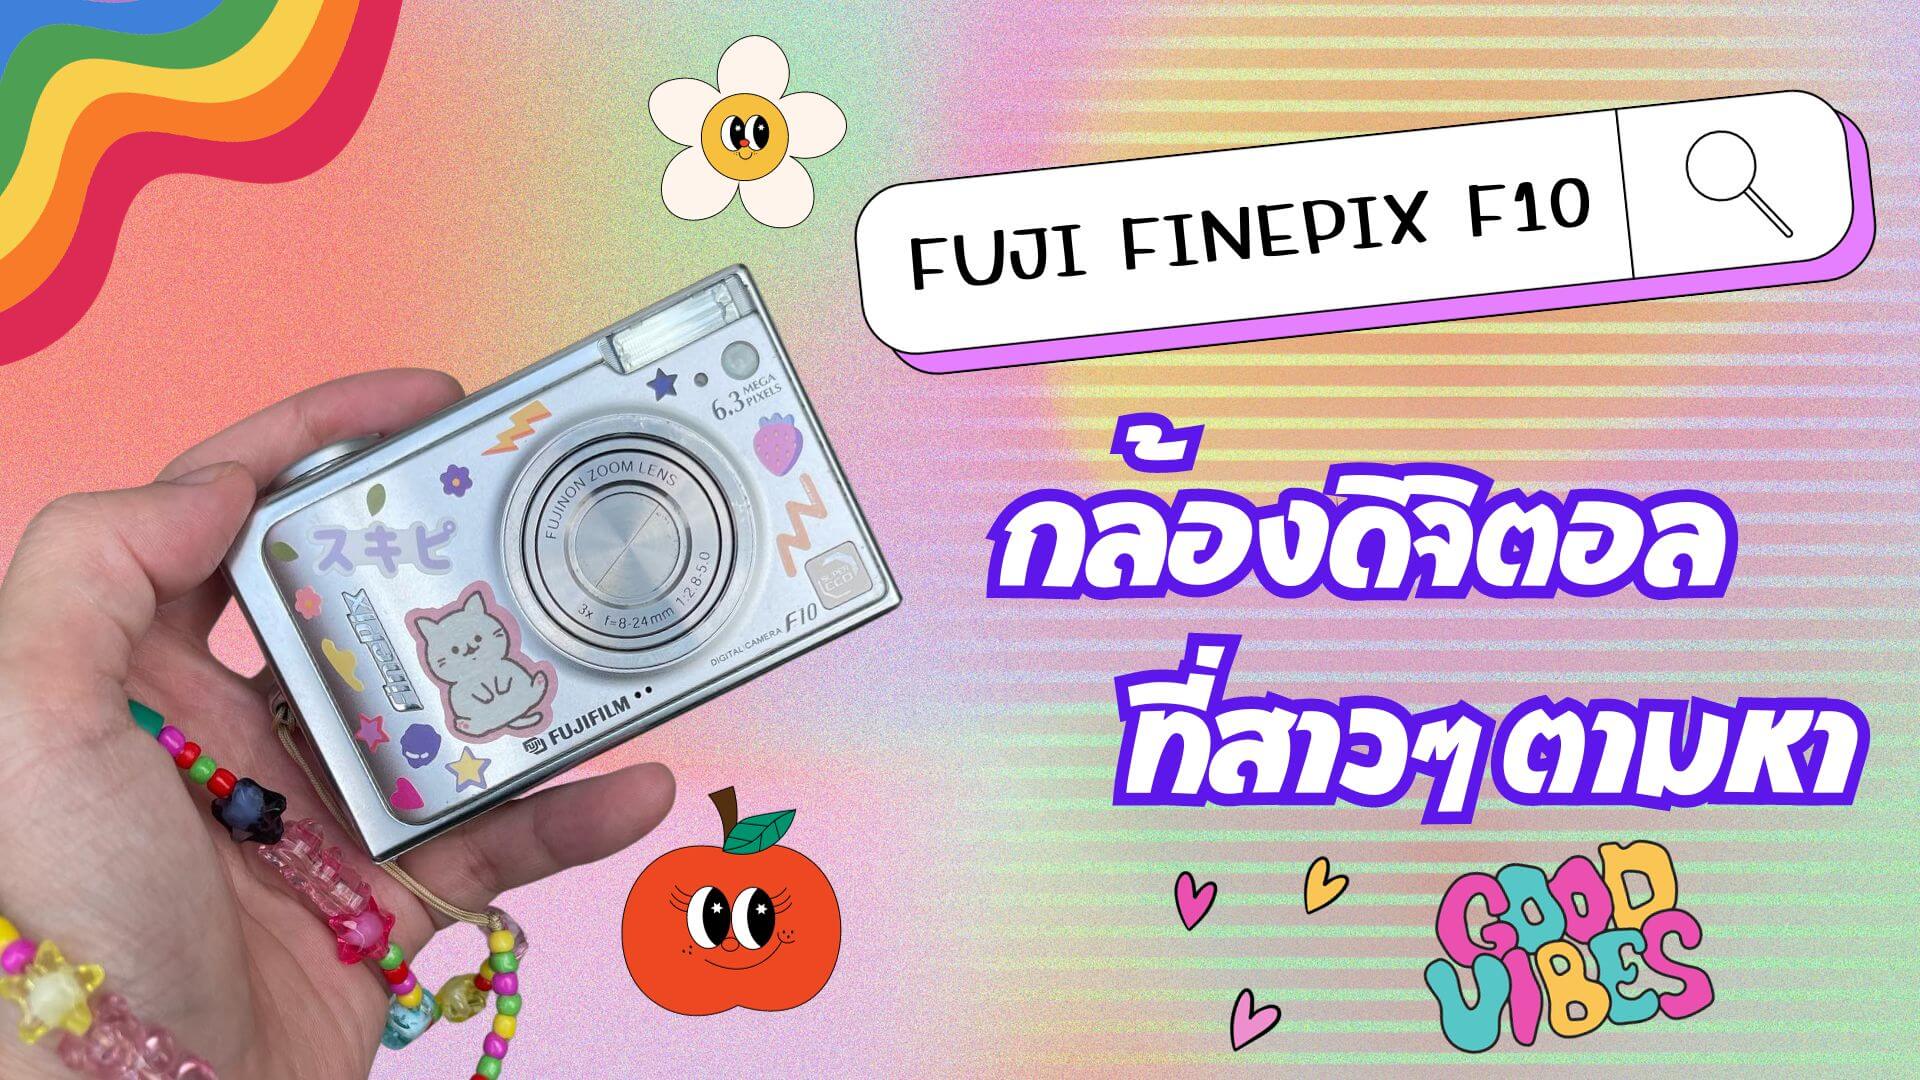 Fuji finepix F10